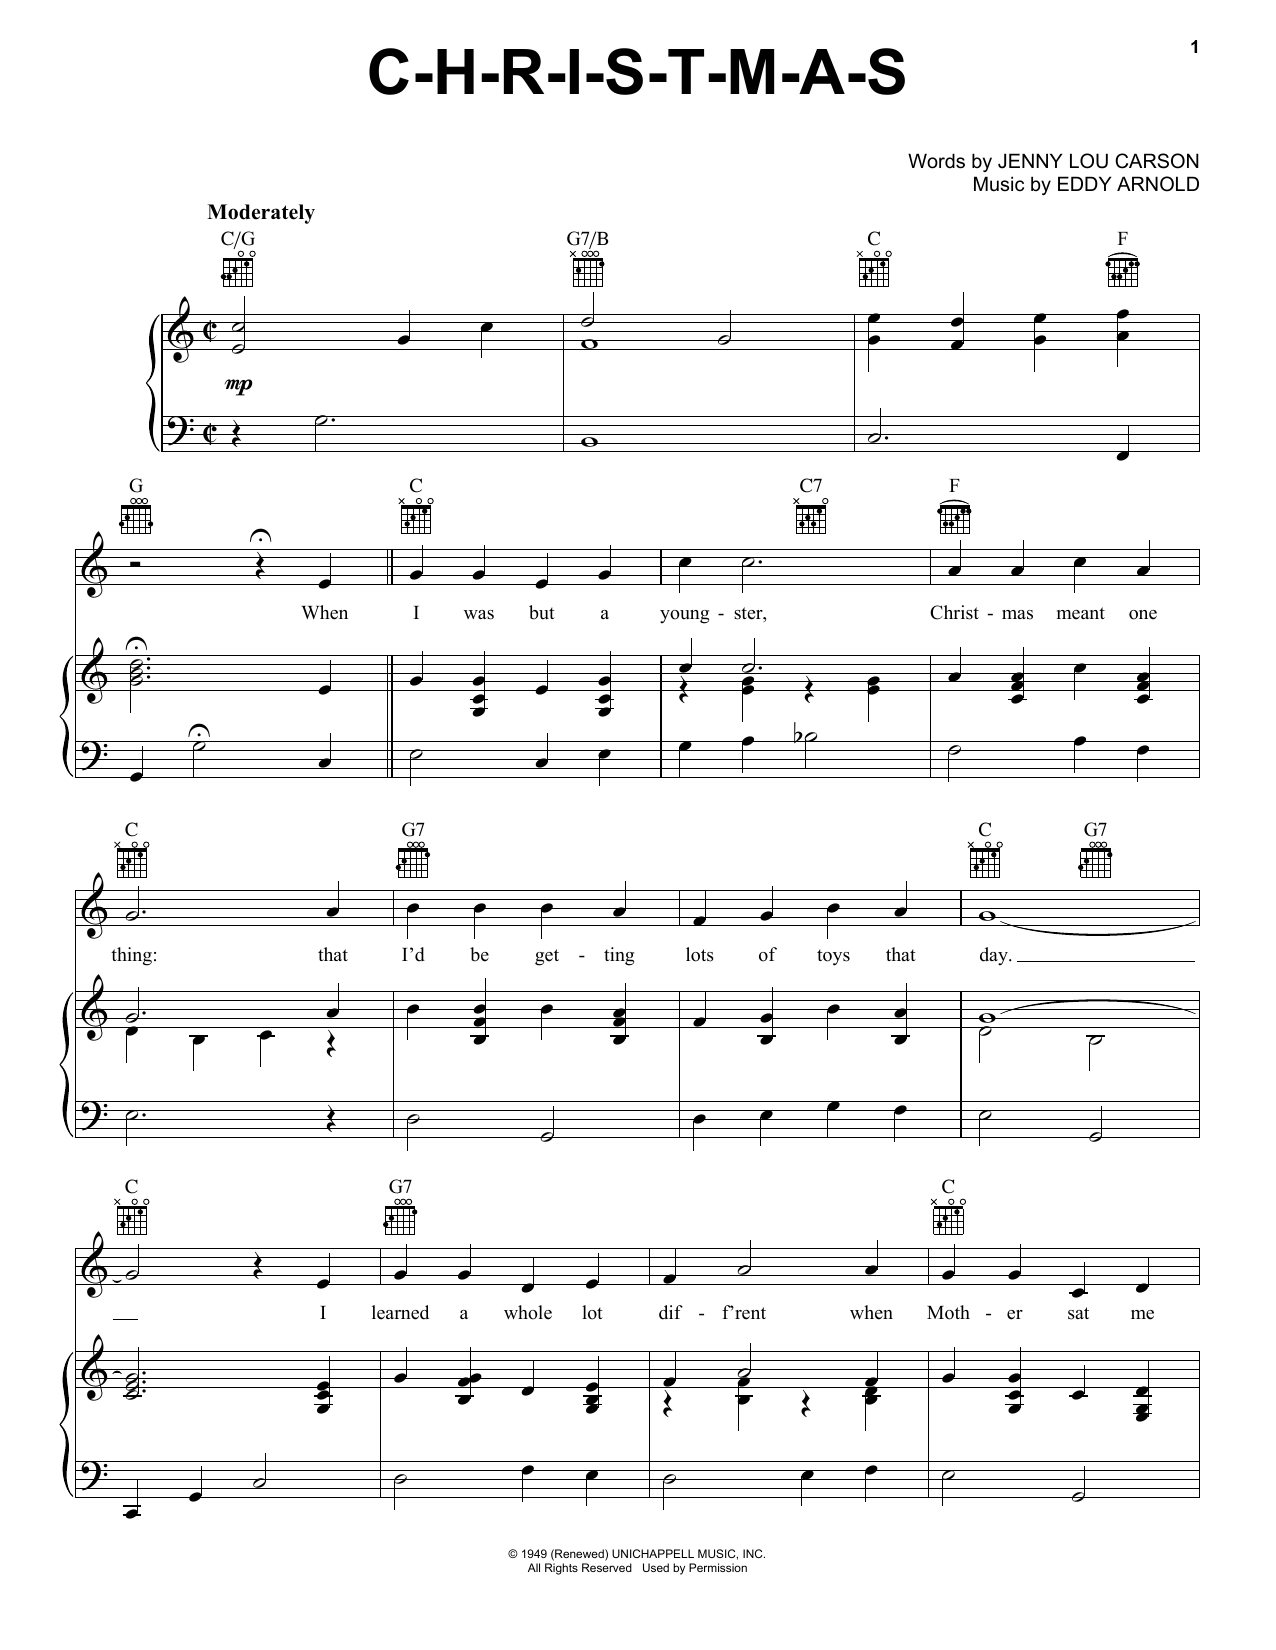 Eddy Arnold C-H-R-I-S-T-M-A-S Sheet Music Notes & Chords for Flute - Download or Print PDF